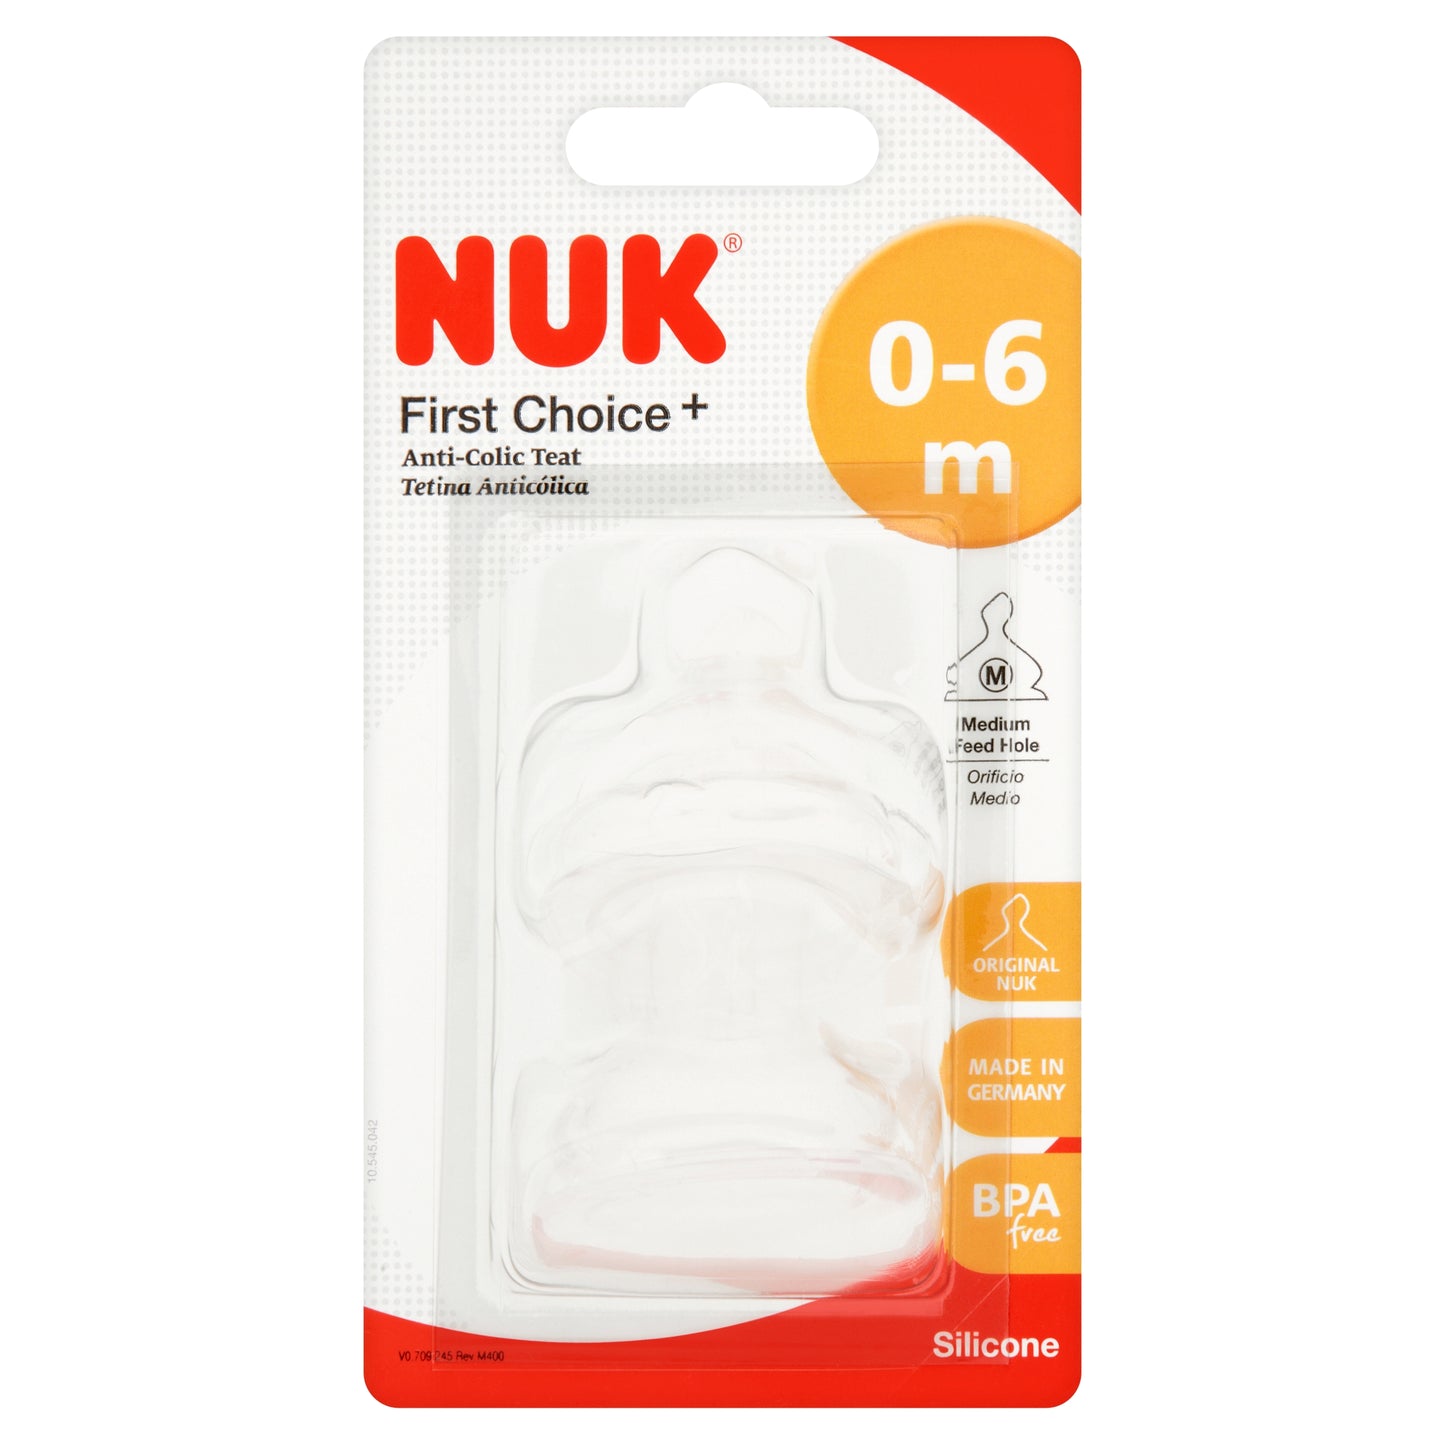 NUK First Choice+ Silicone Teat 0-6m Medium 2Pk at Baby City